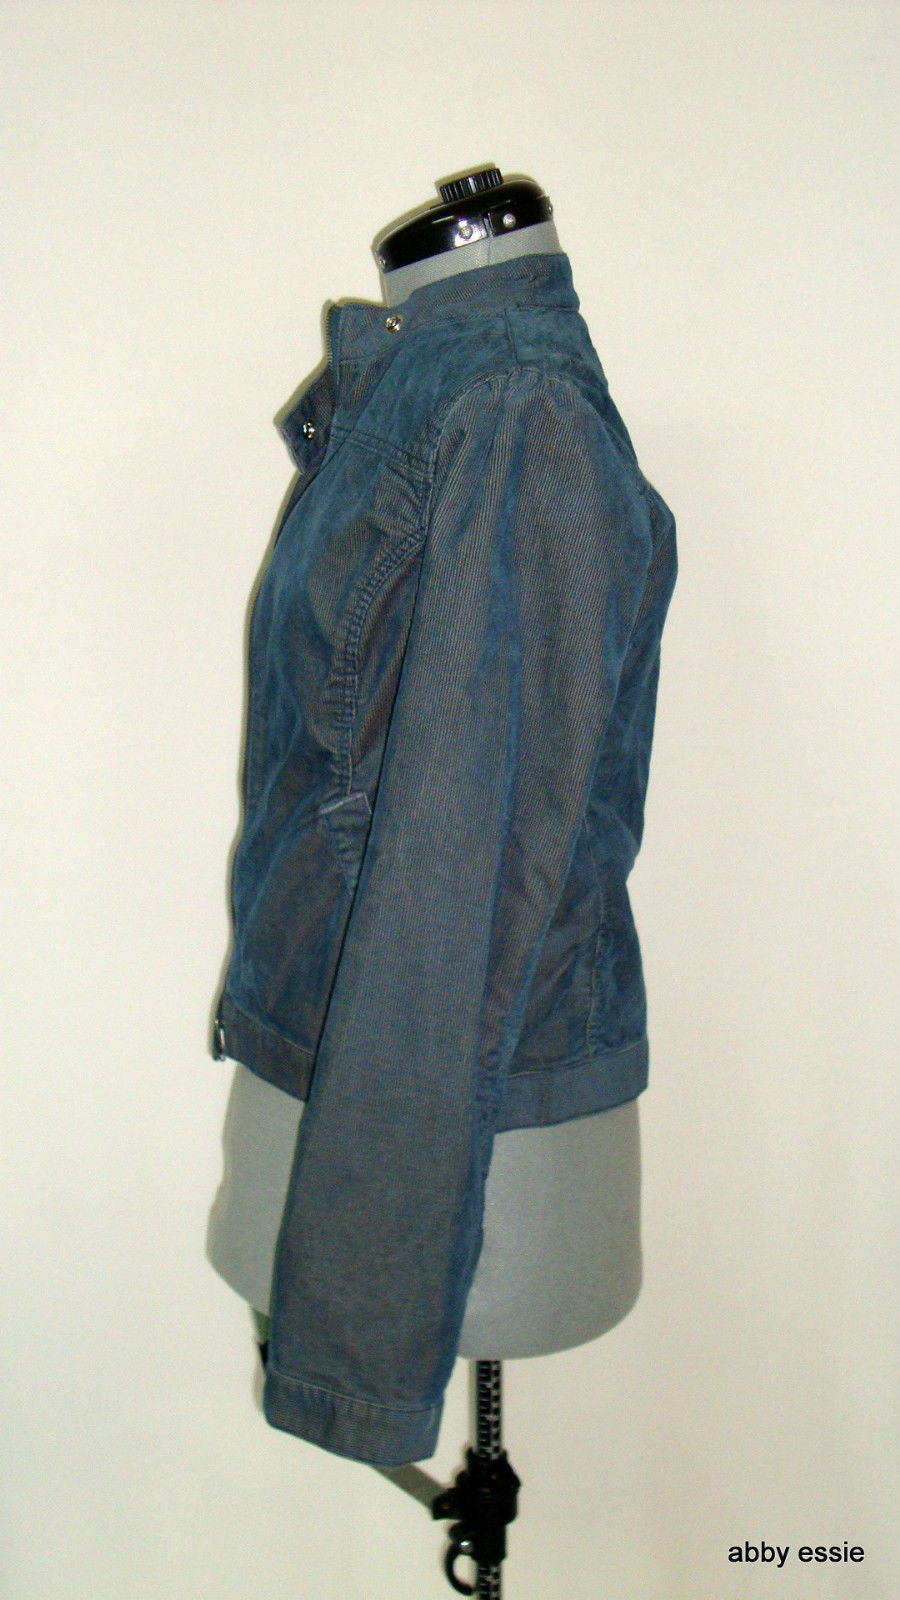 Mossimo Blue-Gray Corduroy Jacket Large Abby Essie